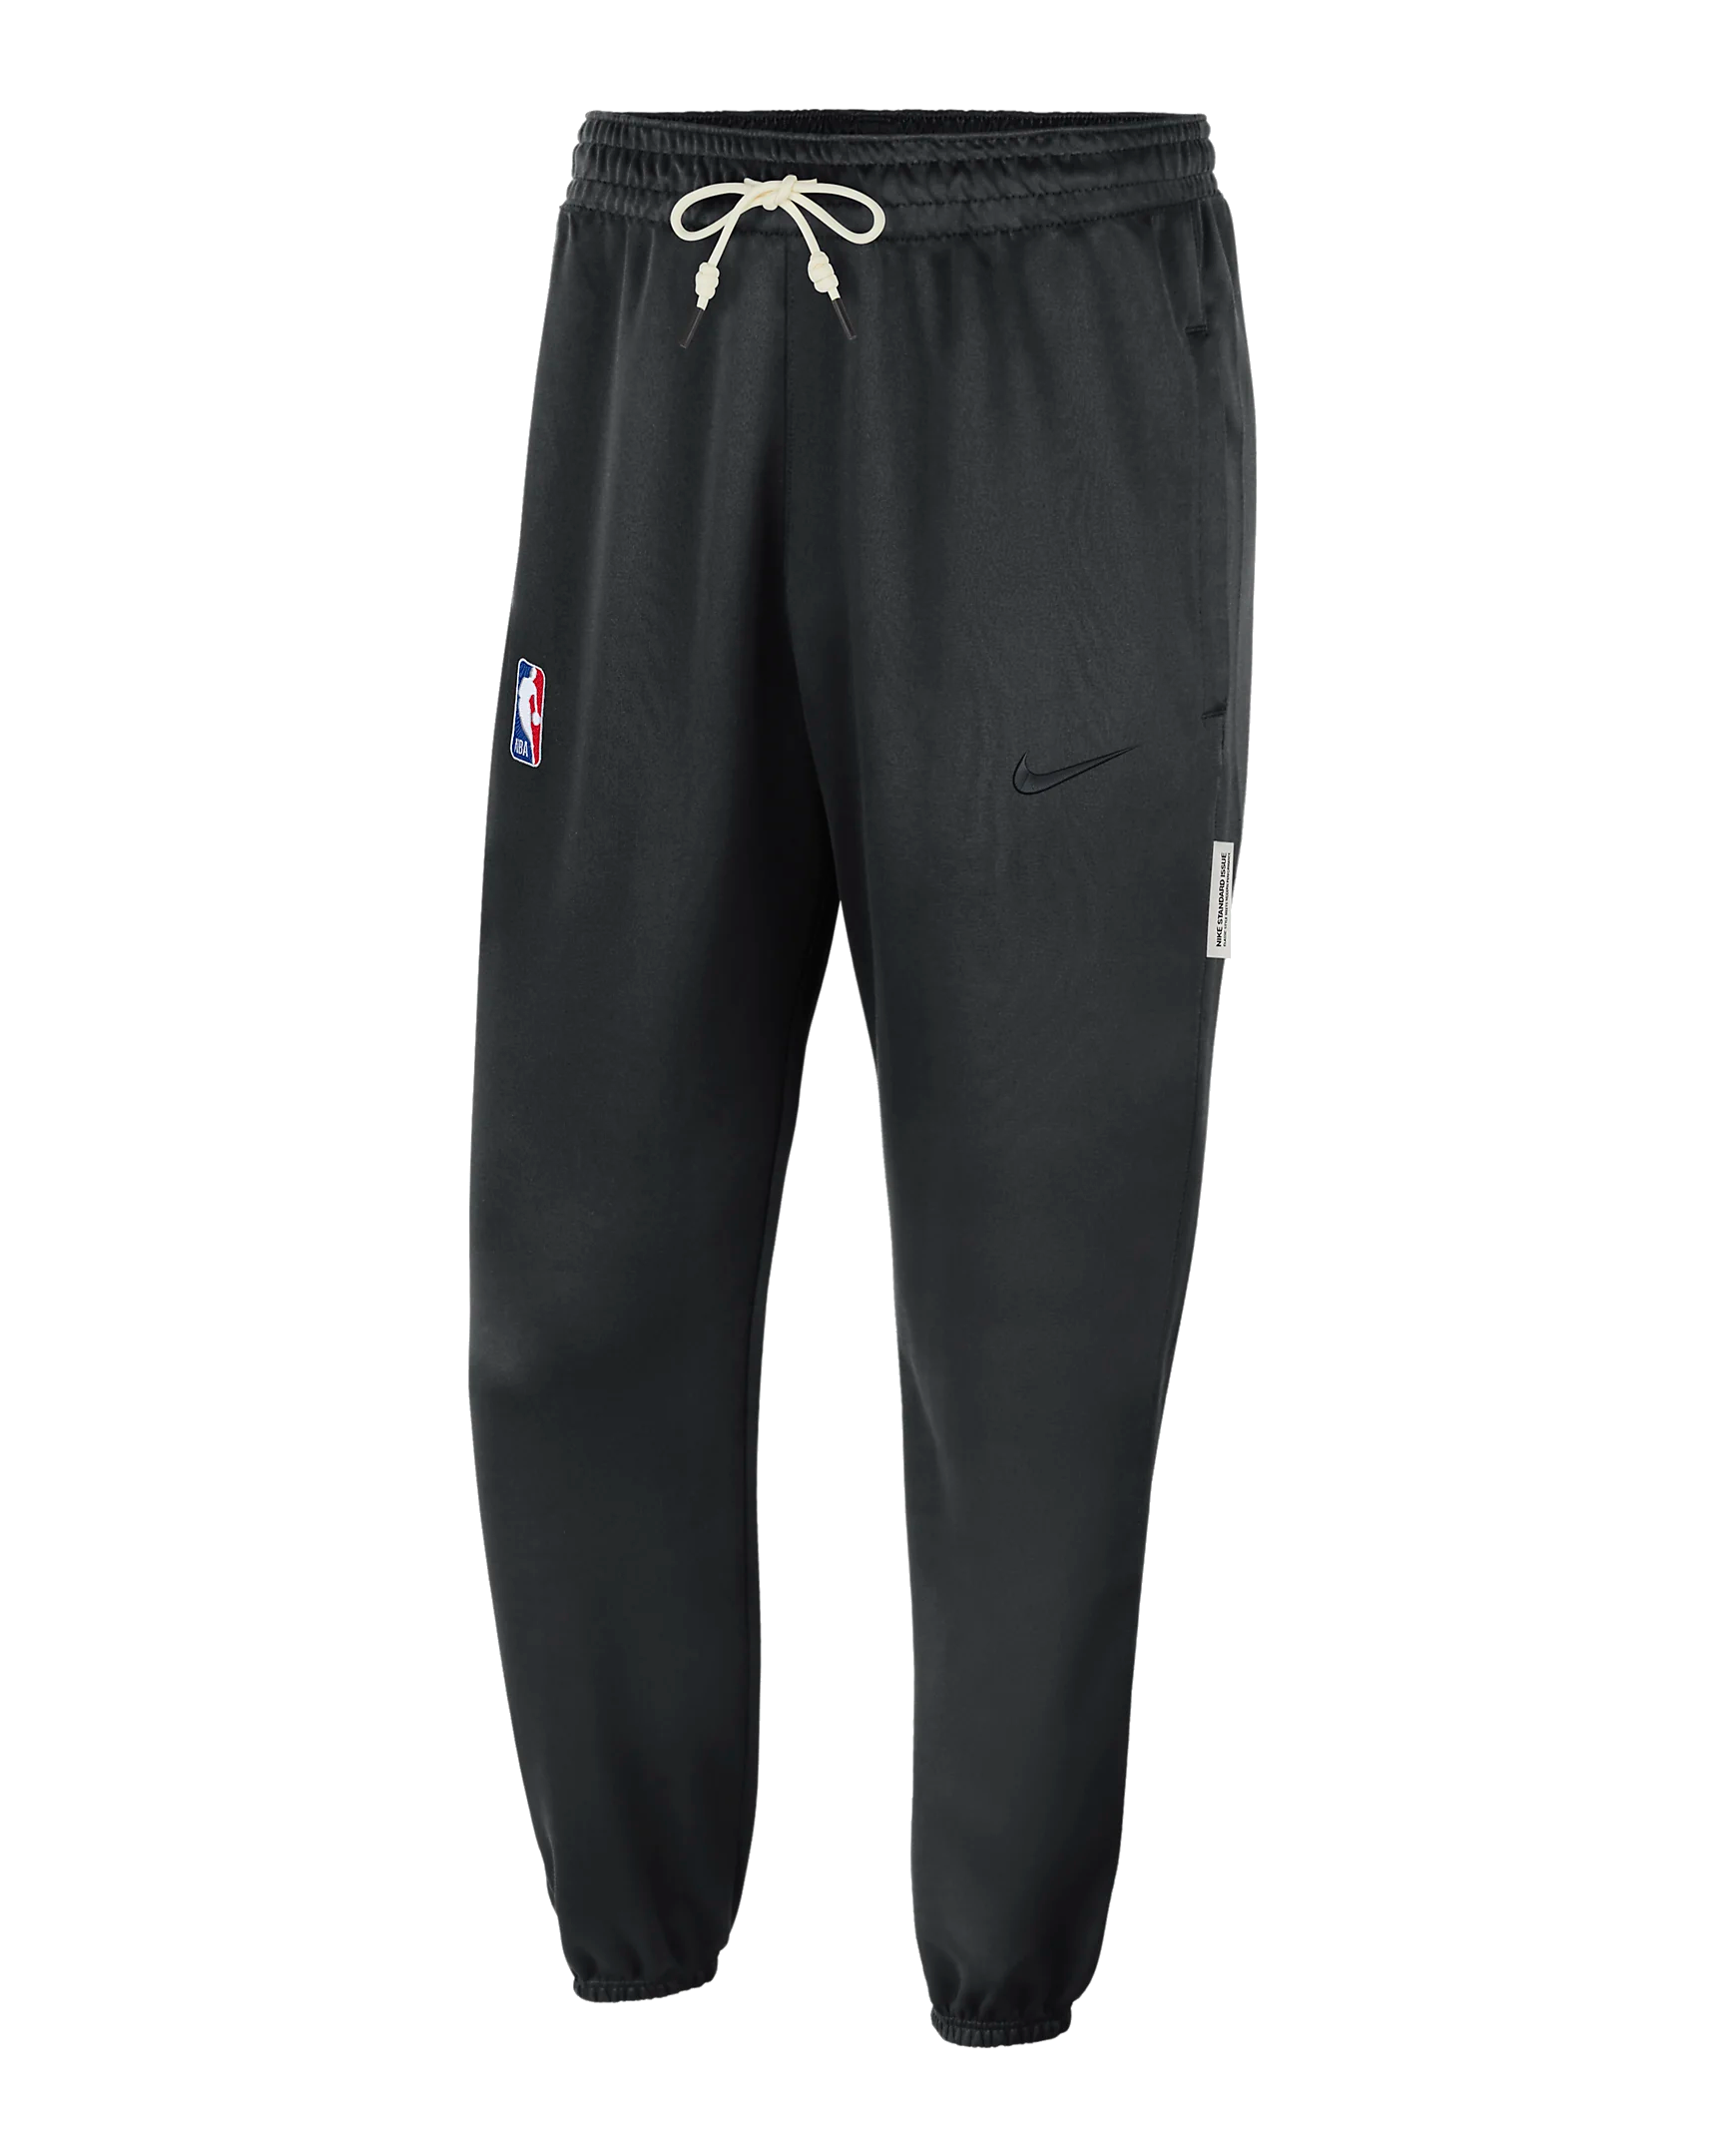 NBA Champion 1990s black track pants mesh lined trousers basketball vintage  XL | eBay